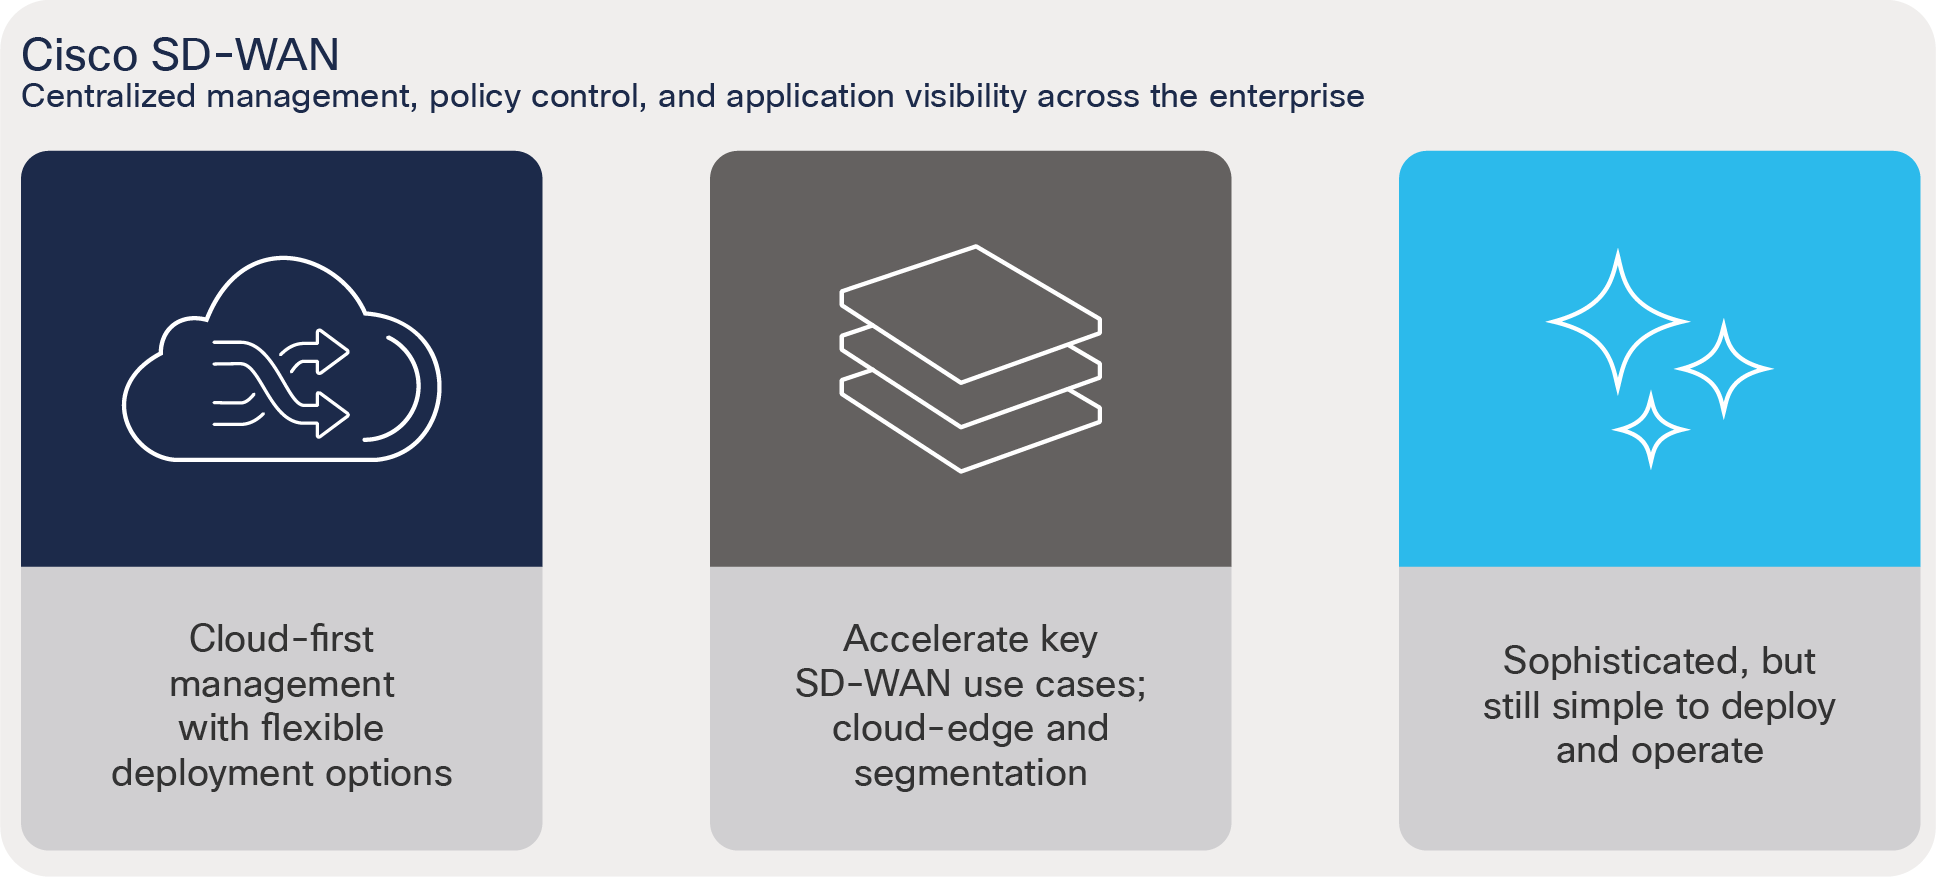 Benefits of Cisco SD-WAN